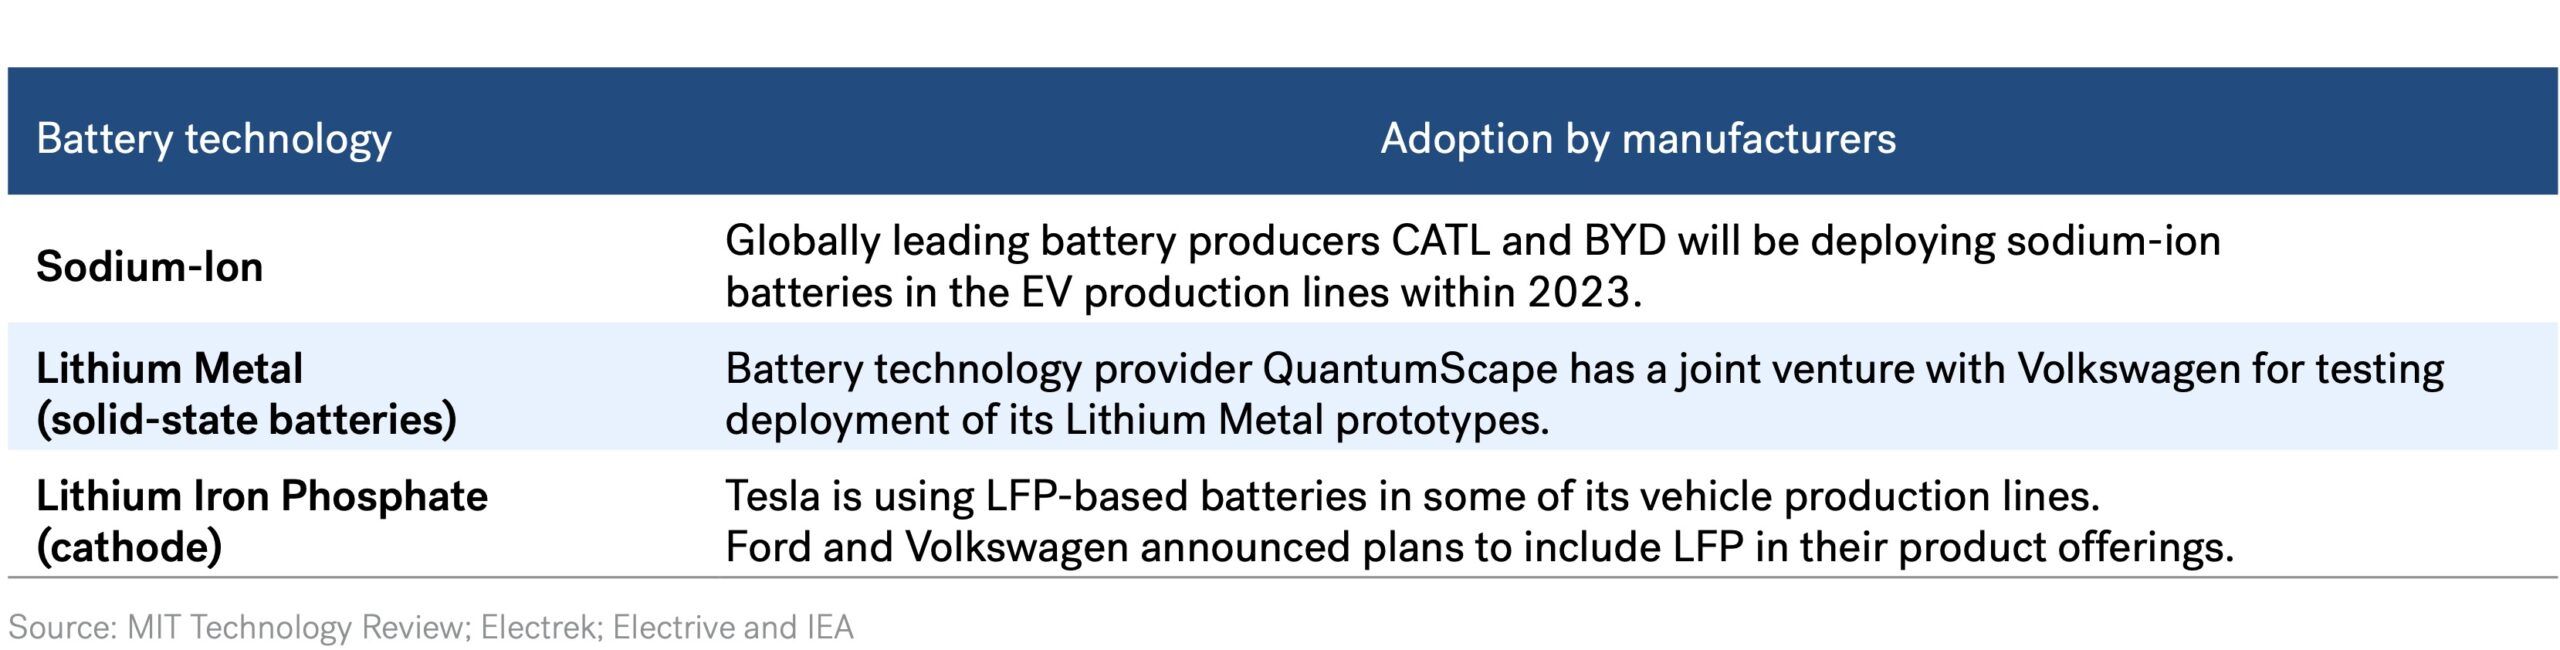 Gigafactory - Emerging Alternatives in Commercial Deployment of Batteries